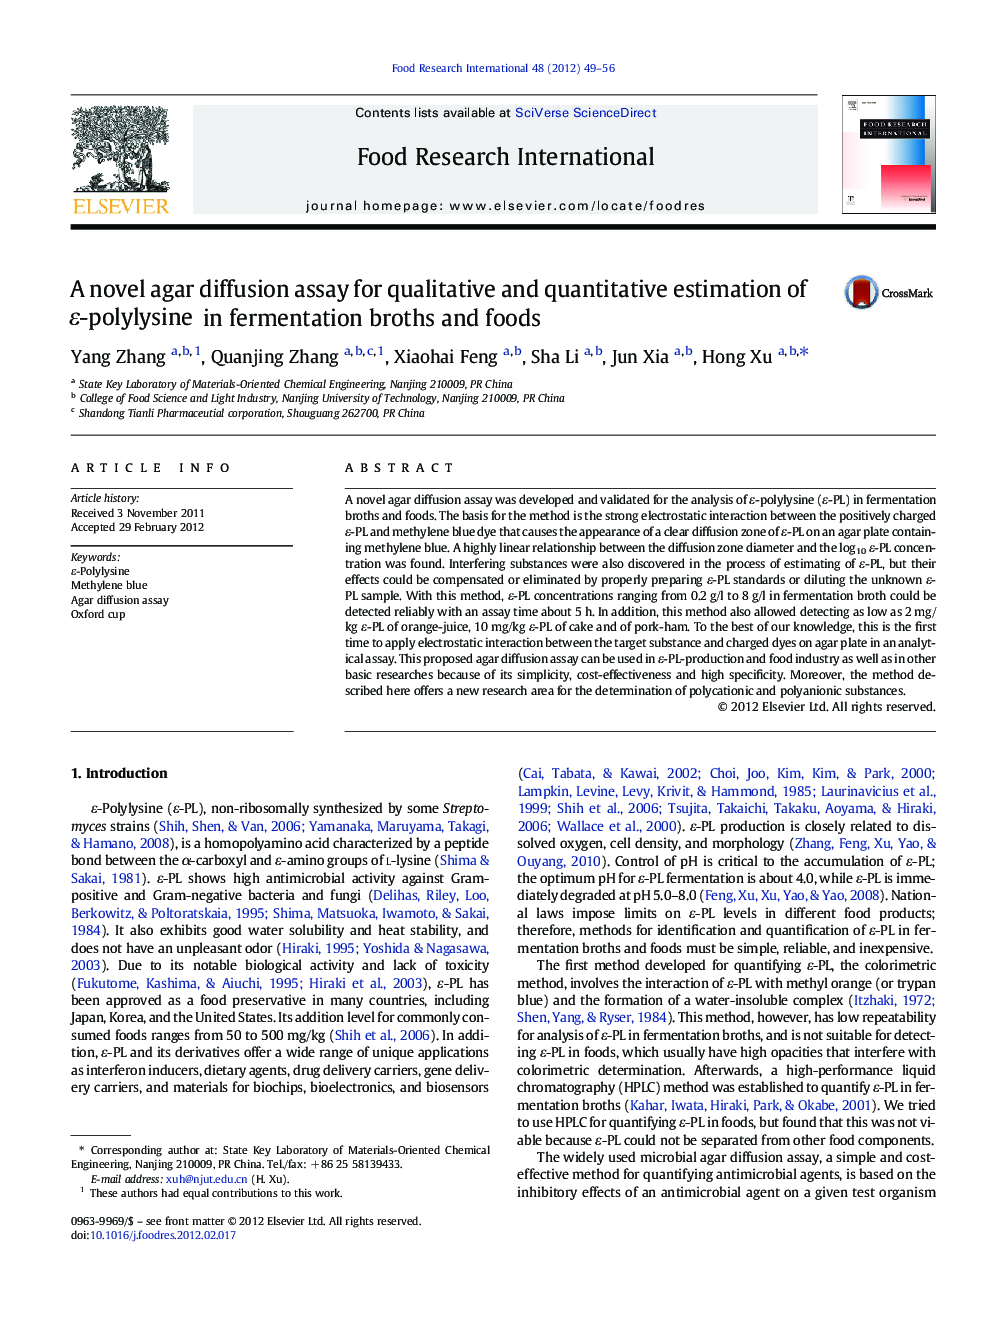 A novel agar diffusion assay for qualitative and quantitative estimation of Îµ-polylysine in fermentation broths and foods